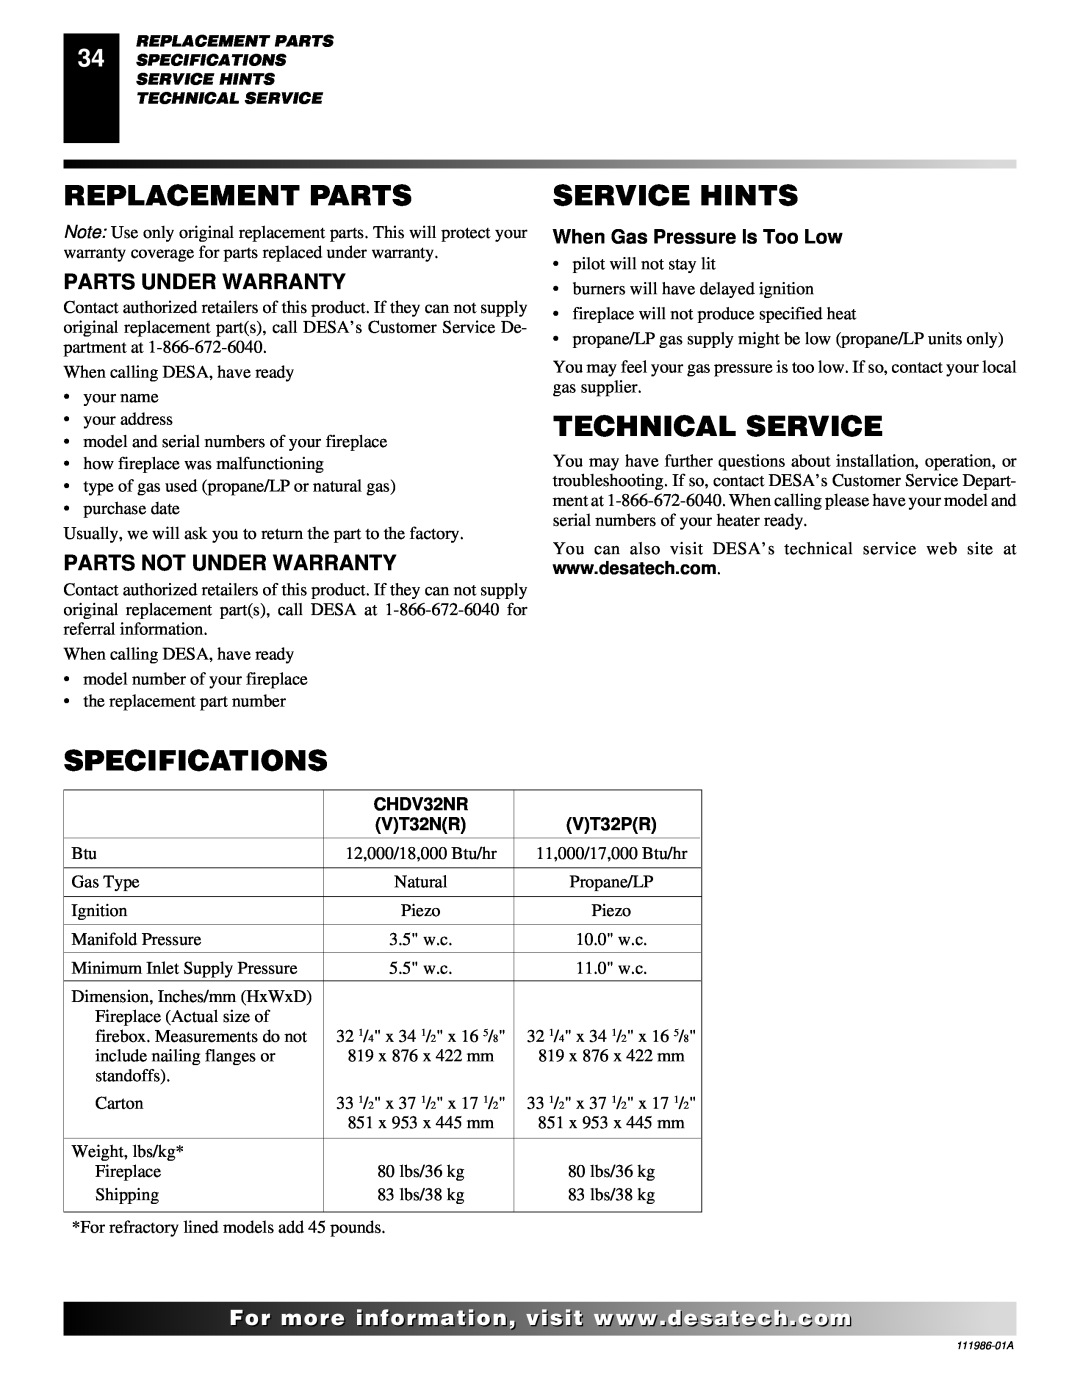 Desa T32P Replacement Parts, Service Hints, Technical Service, Specifications, Parts Under Warranty, CHDV32NR, VT32NR 